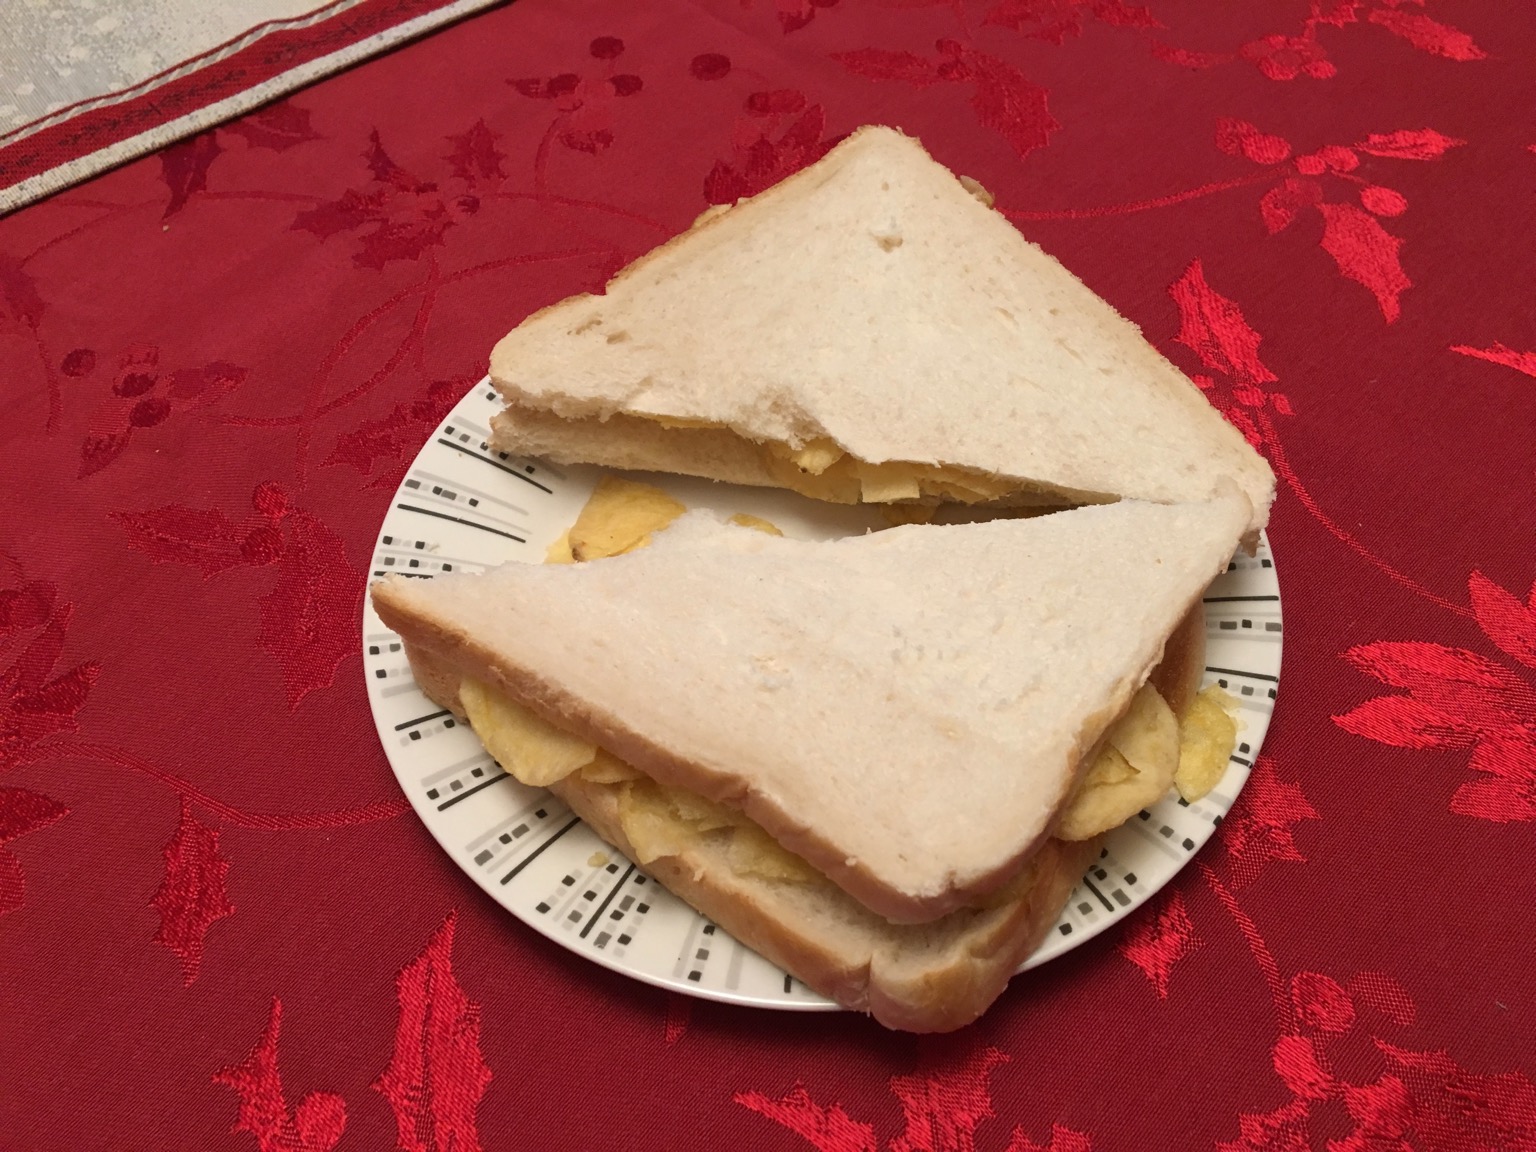 White crisp sandwich cut in half diagonally